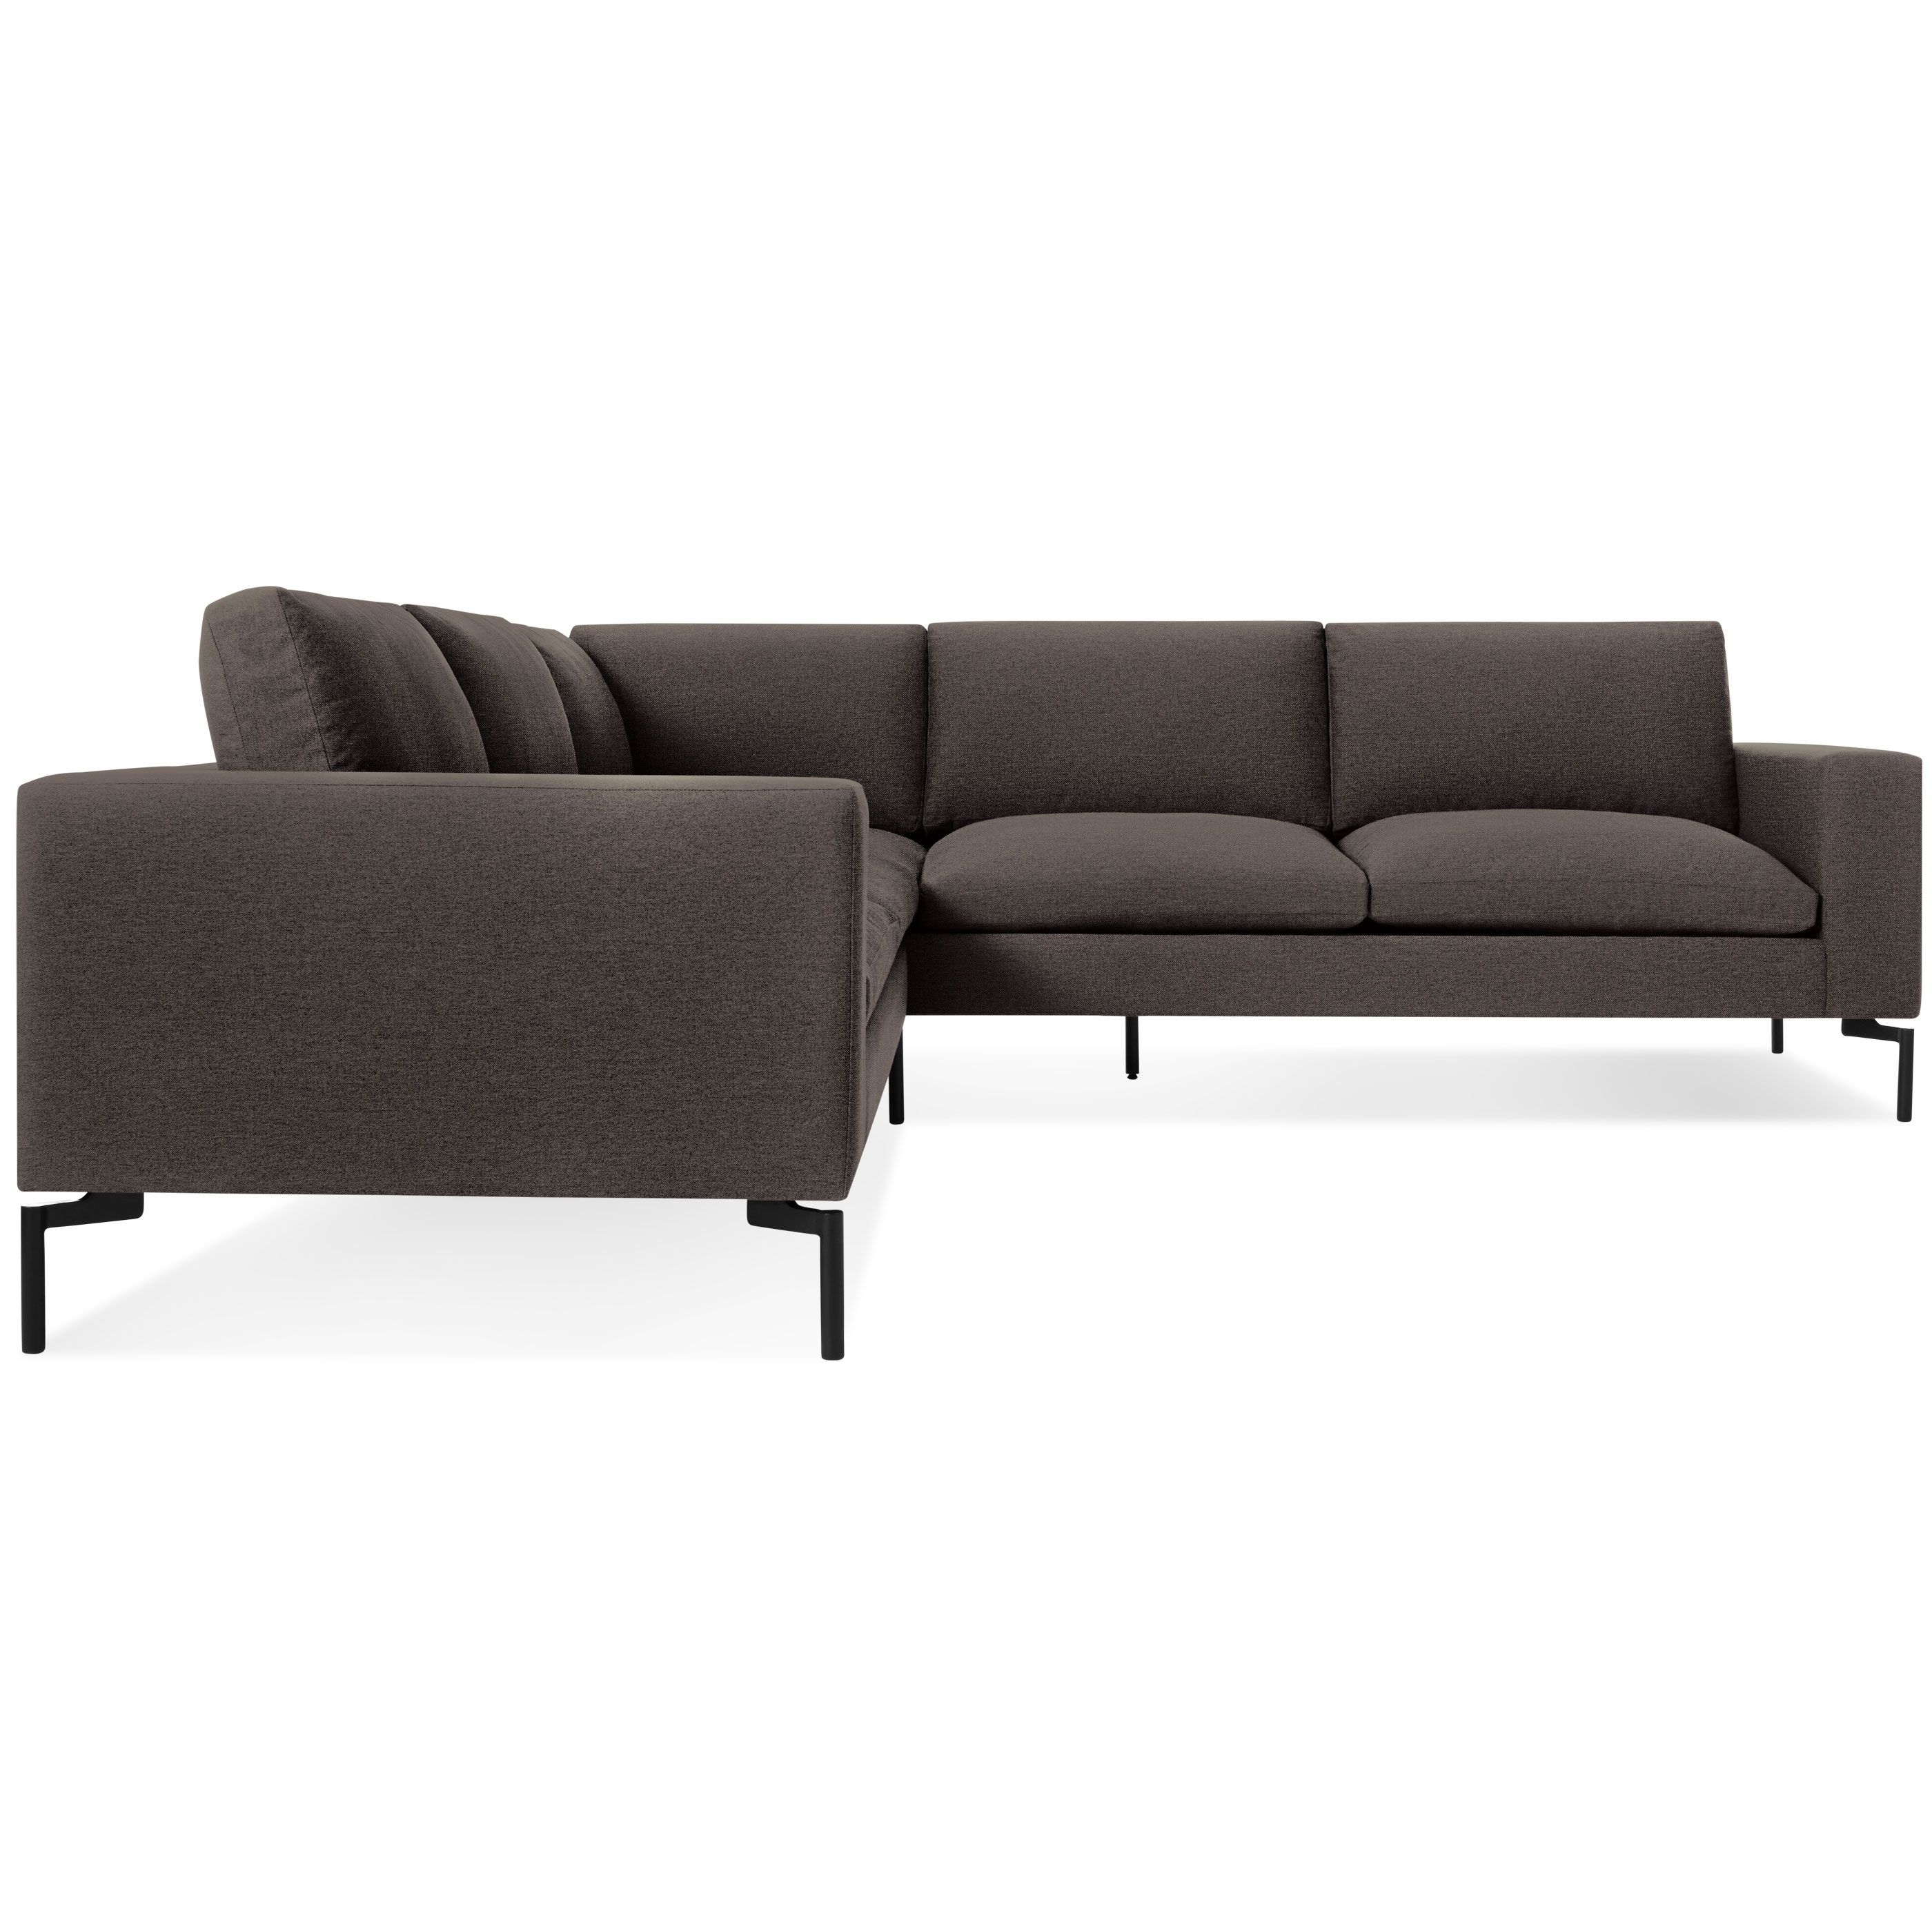 New Standard Small Sectional Sofa – Modern Sofas | Blu Dot With Regard To Nova Scotia Sectional Sofas (View 9 of 10)